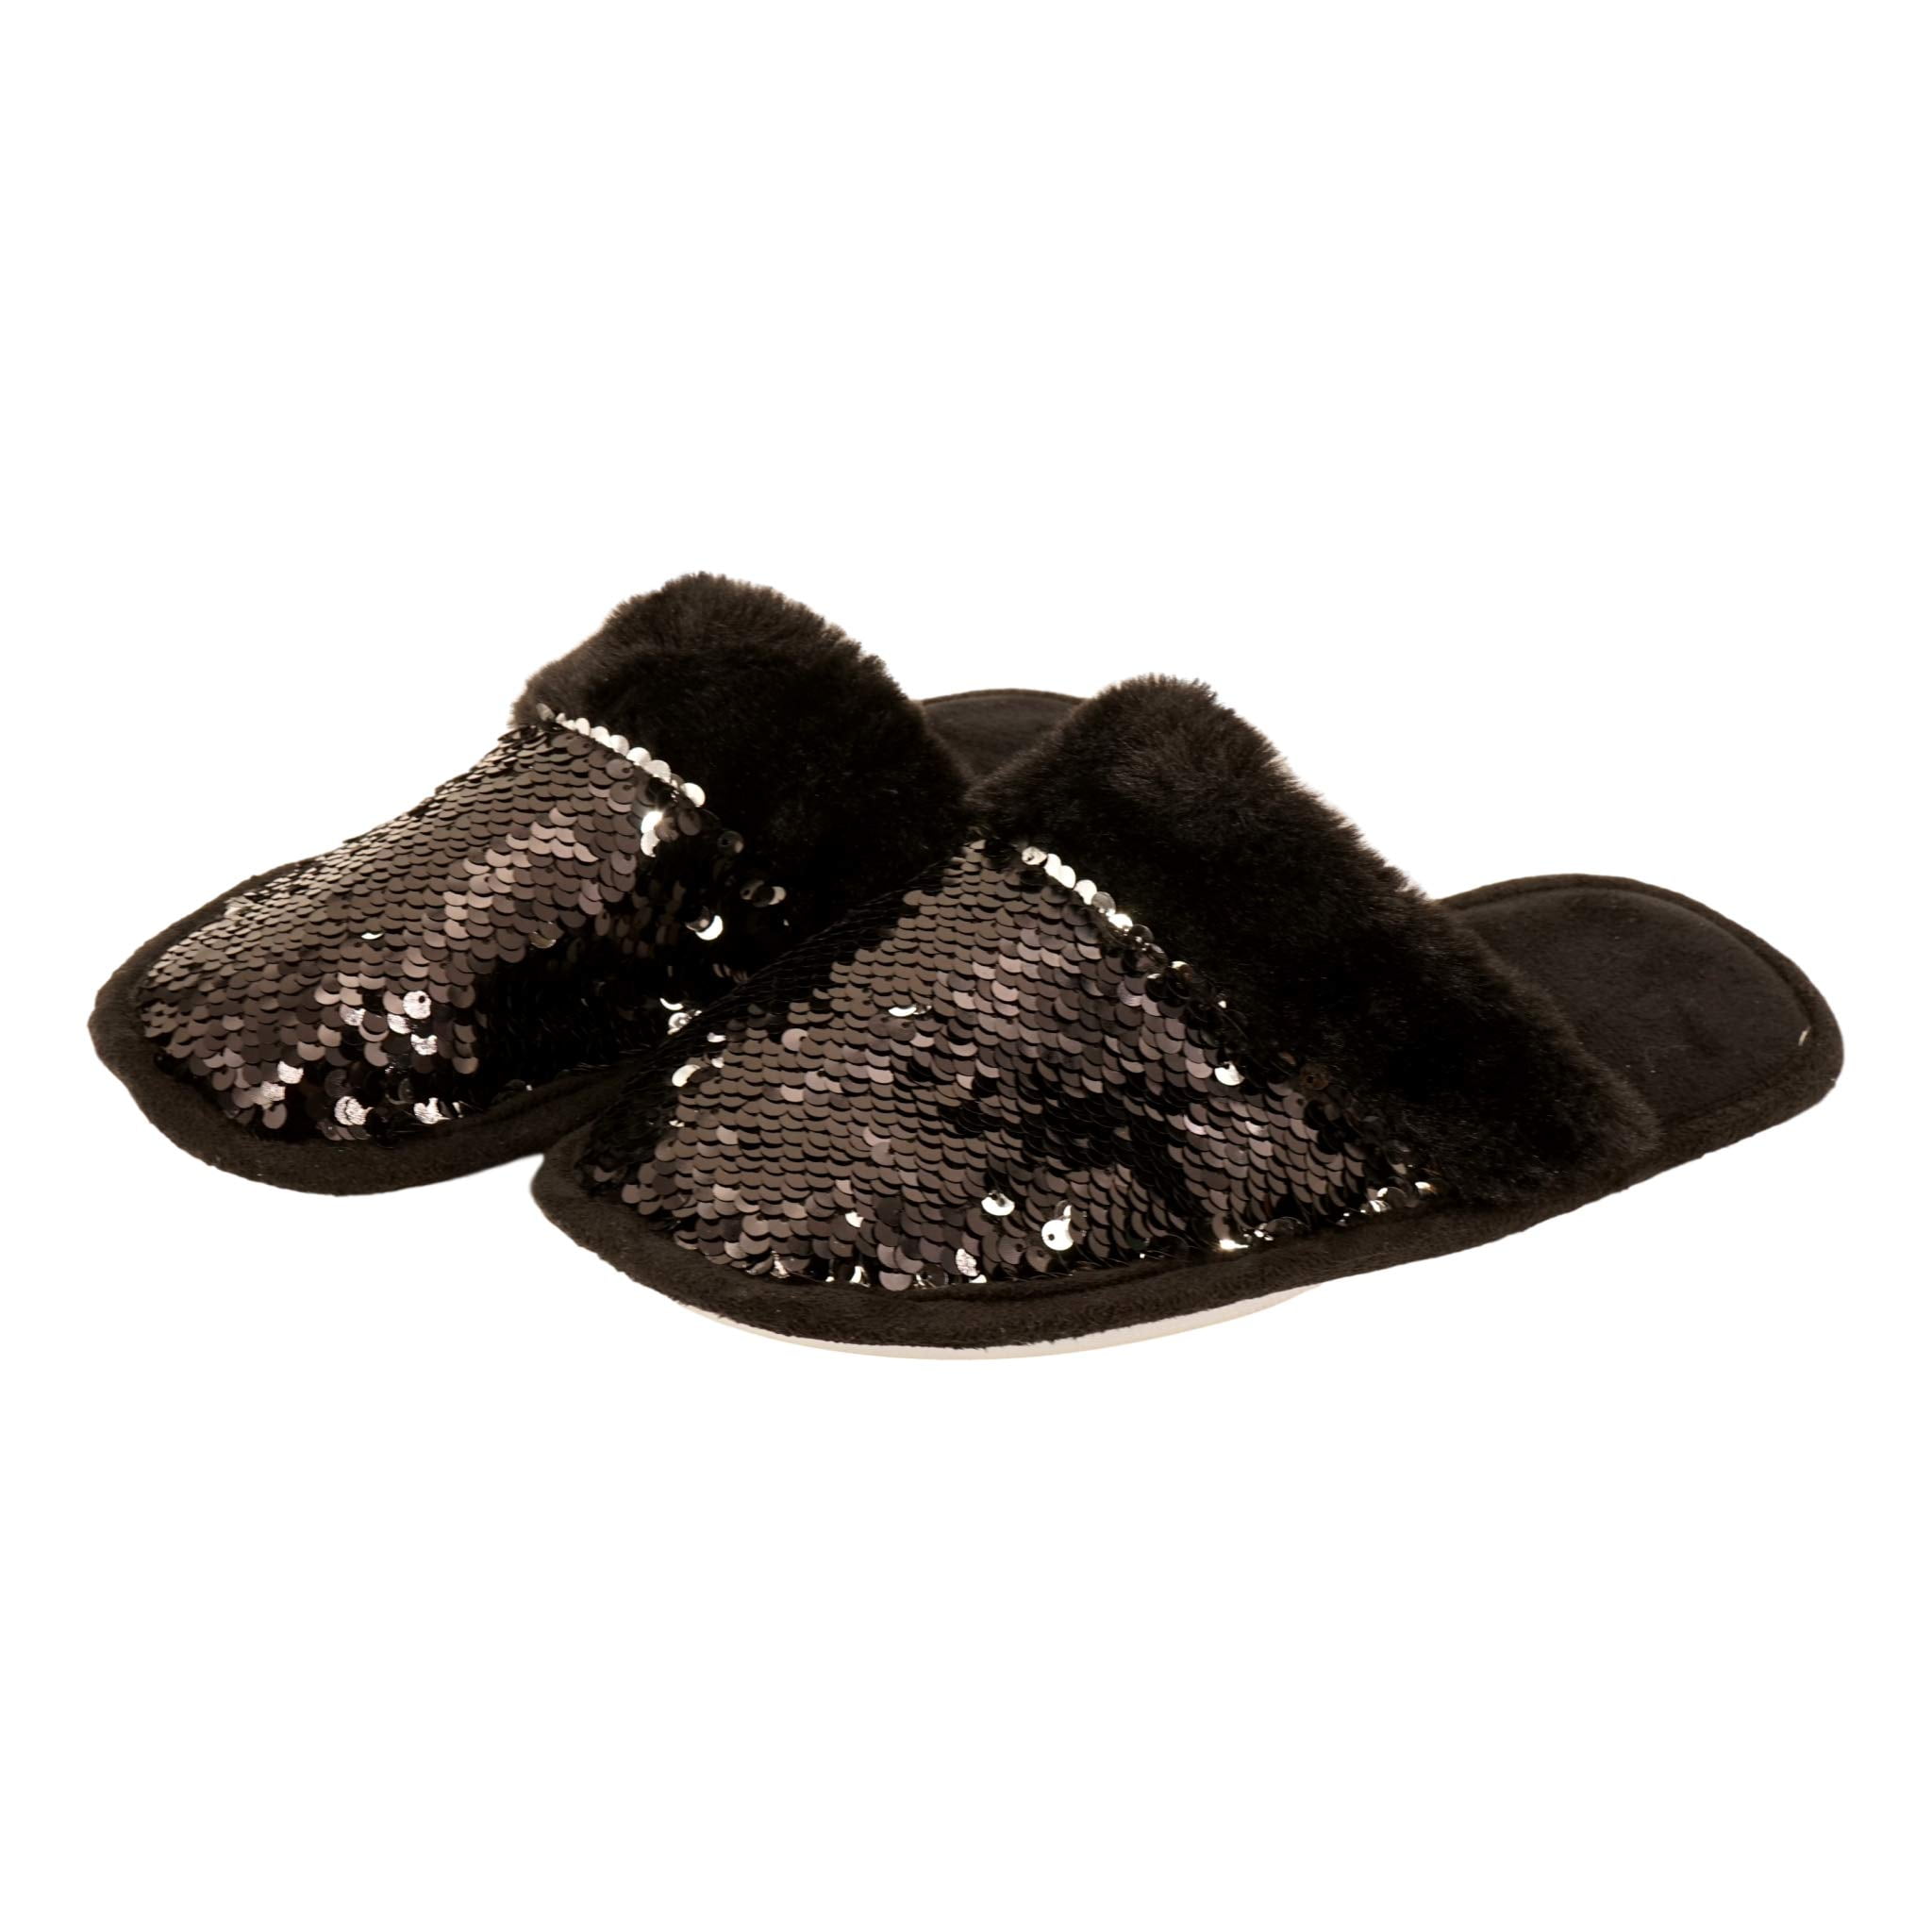 Sperry Sequin Slippers for Women | Mercari